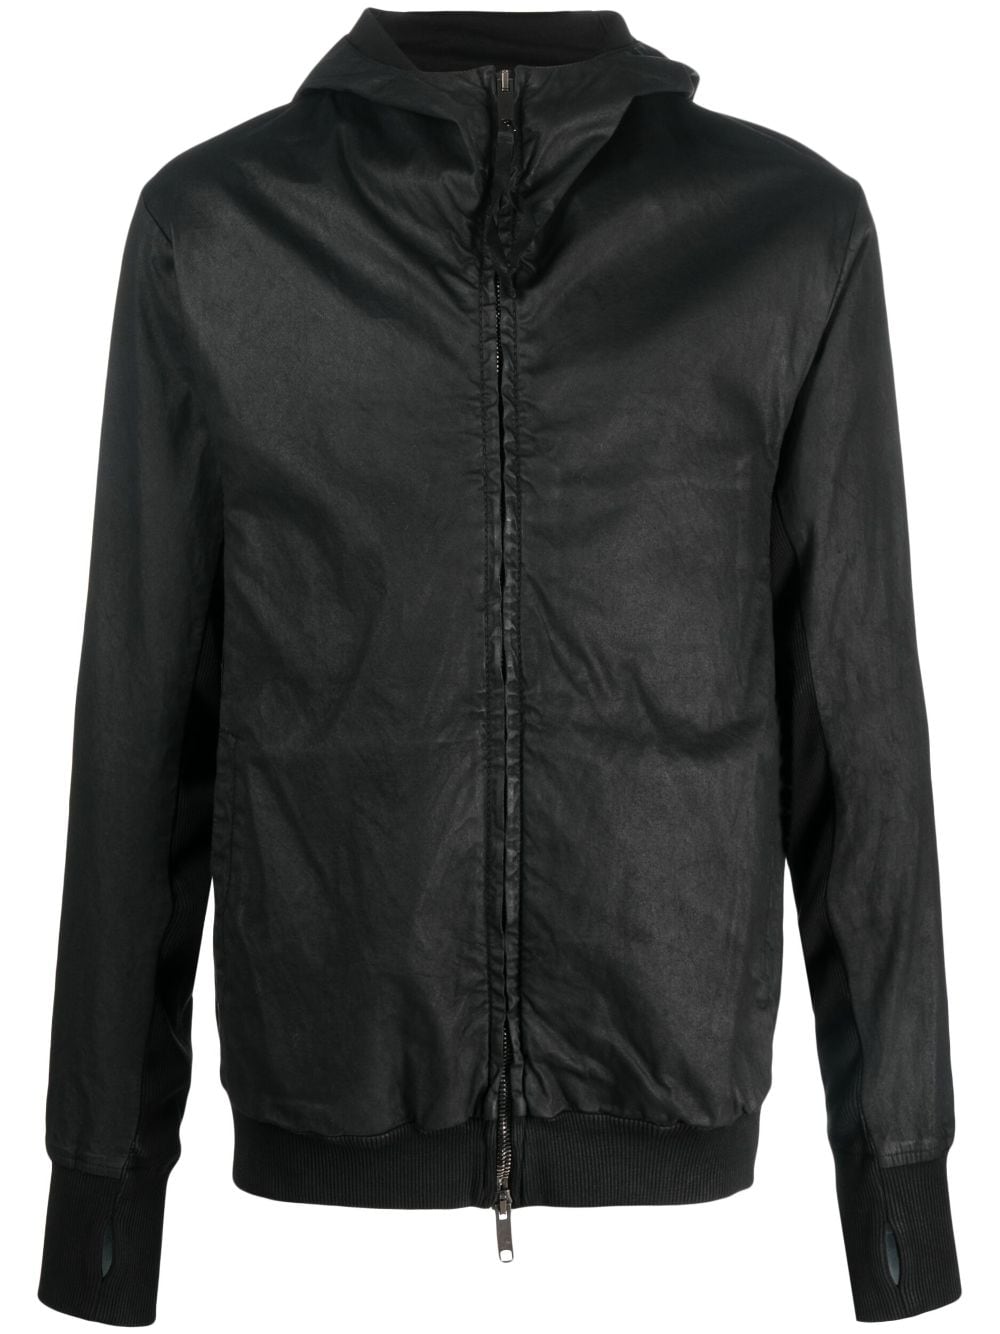 Transit cotton hooded jacket - Black